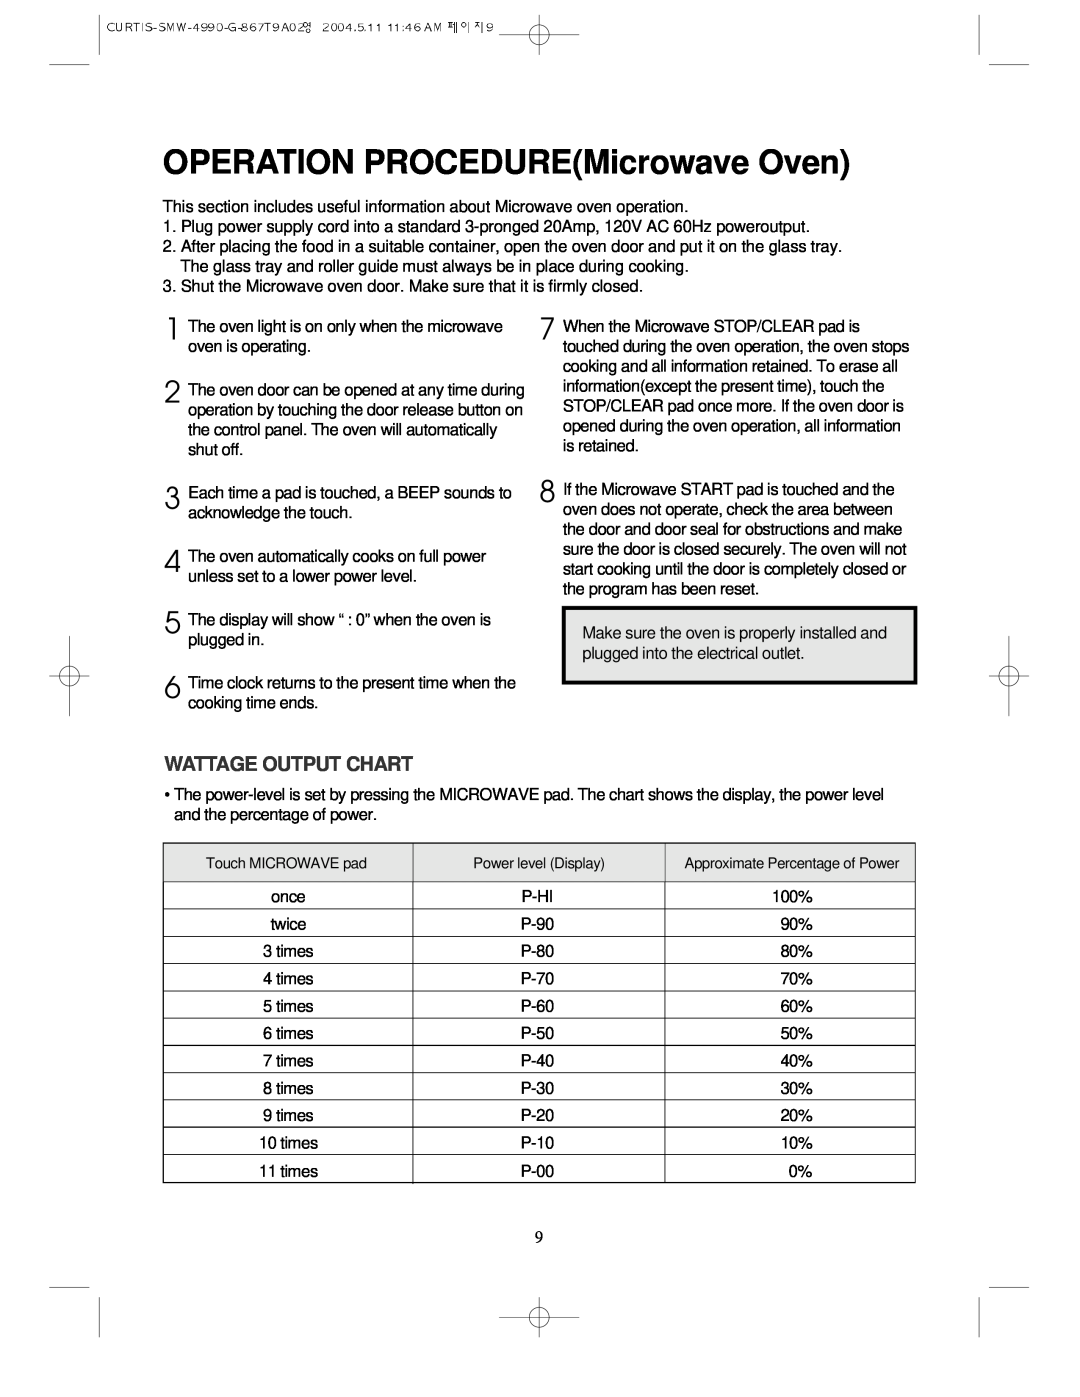 Sunbeam SMW-4990 manual OPERATION PROCEDUREMicrowave Oven, Wattage Output Chart 